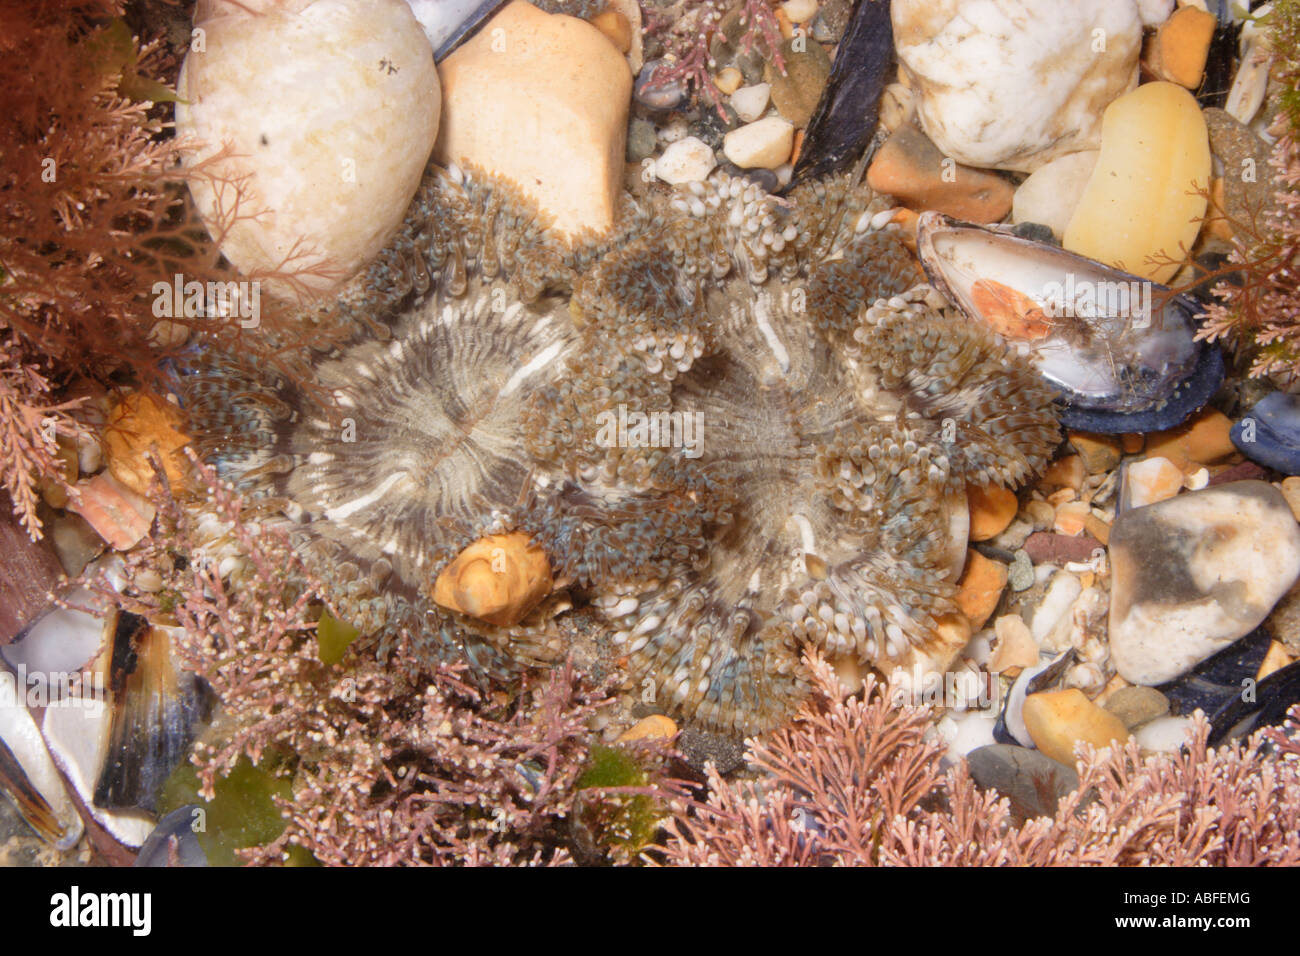 Daisy anemones Cereus pedunculatus Sagartiidae in a rockpool UK Stock Photo